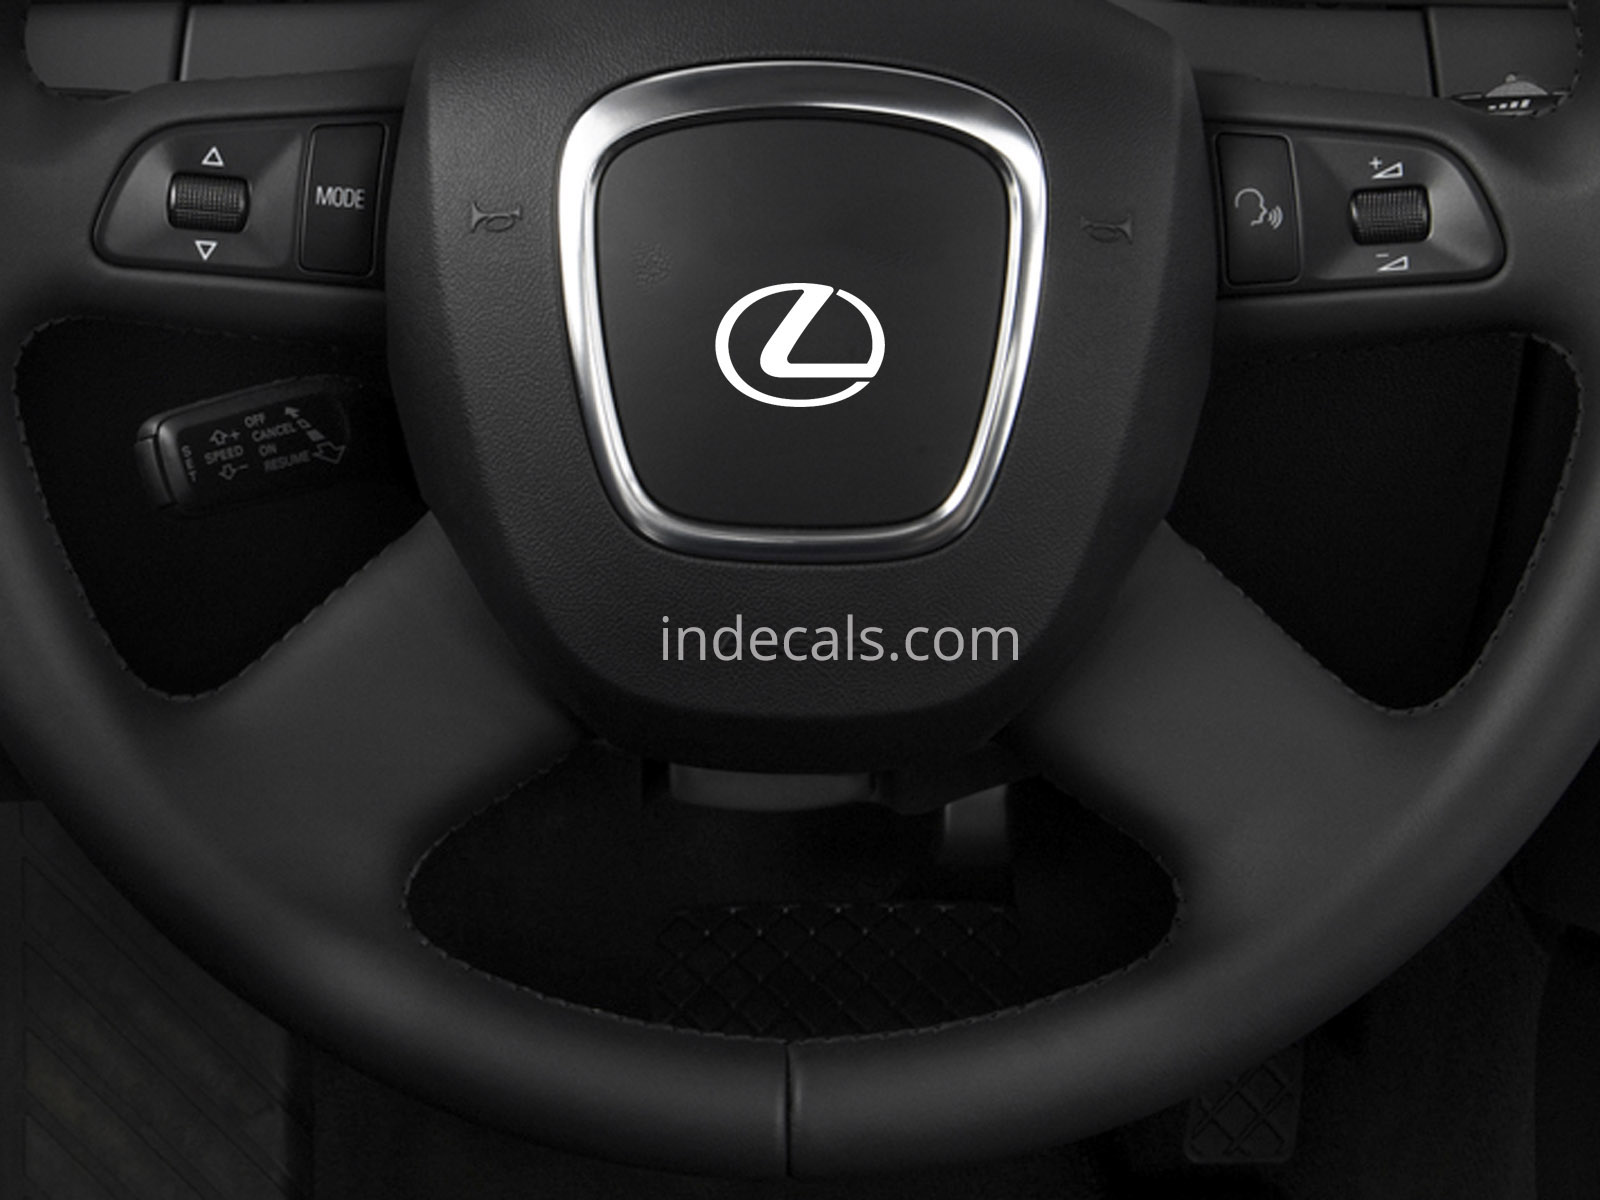 3 x Lexus Stickers for Steering Wheel - White